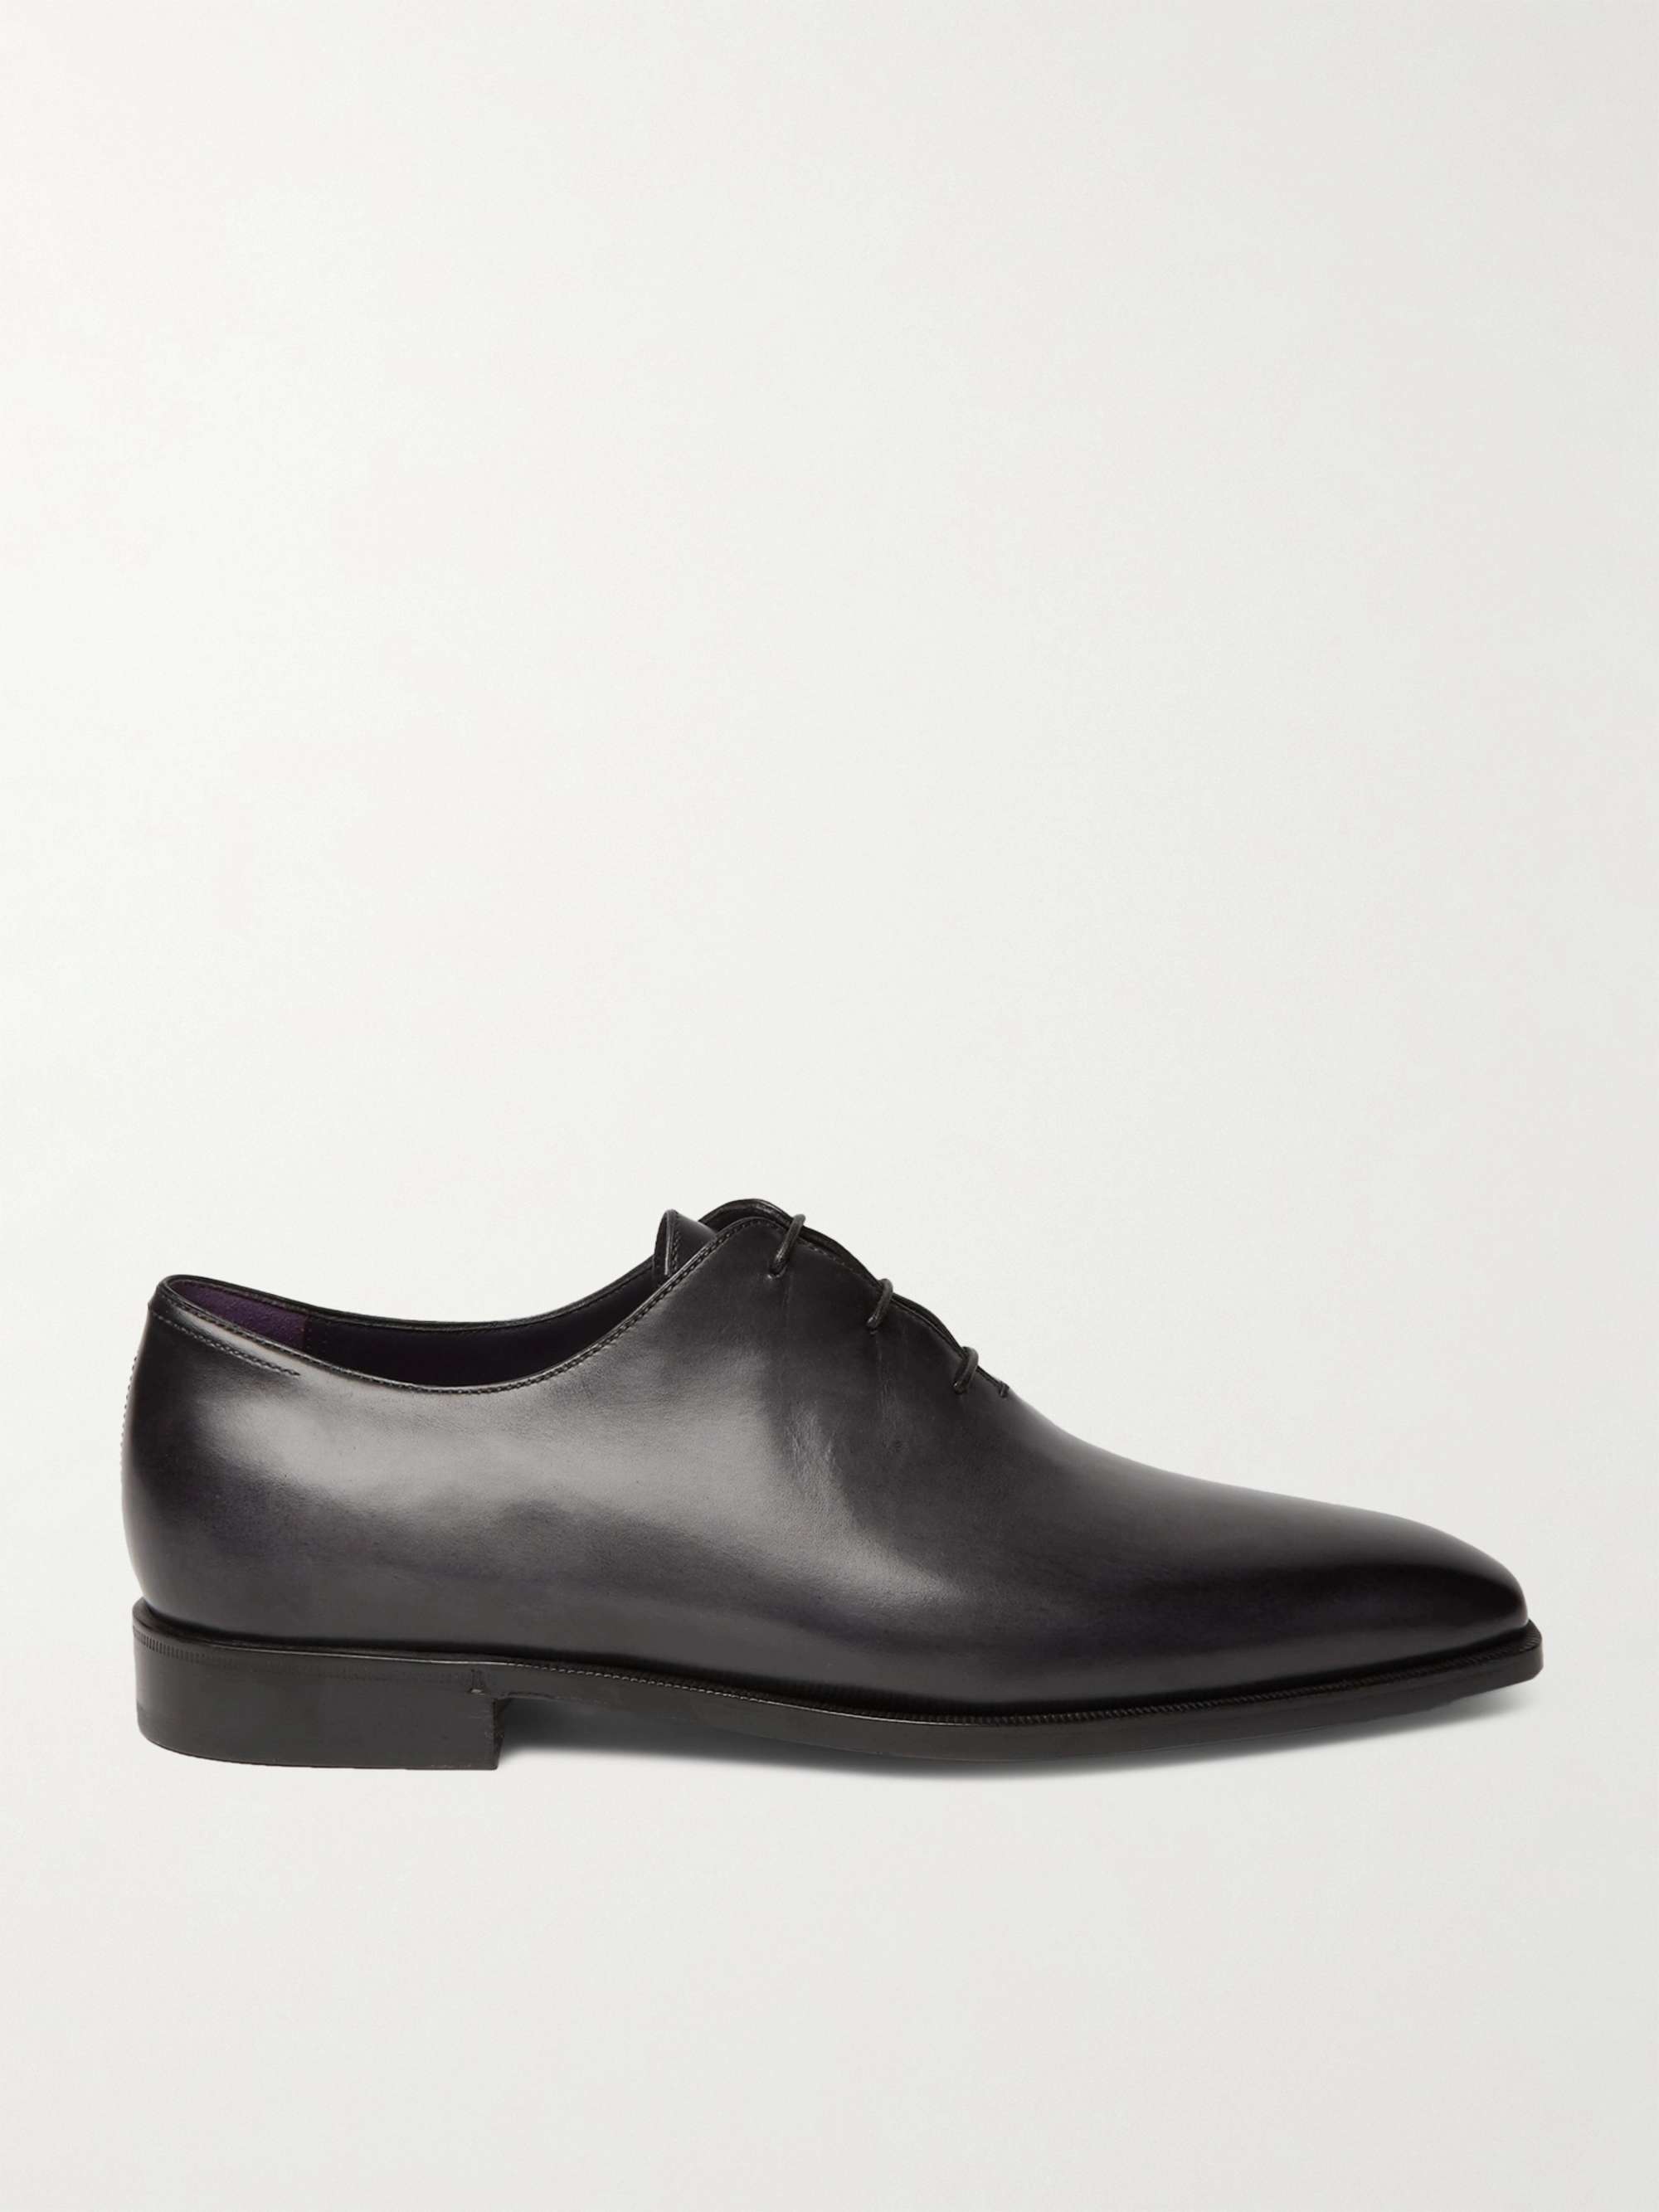 Berluti Leather Oxford Shoes - Men - Black Oxford Shoes - UK 7.5